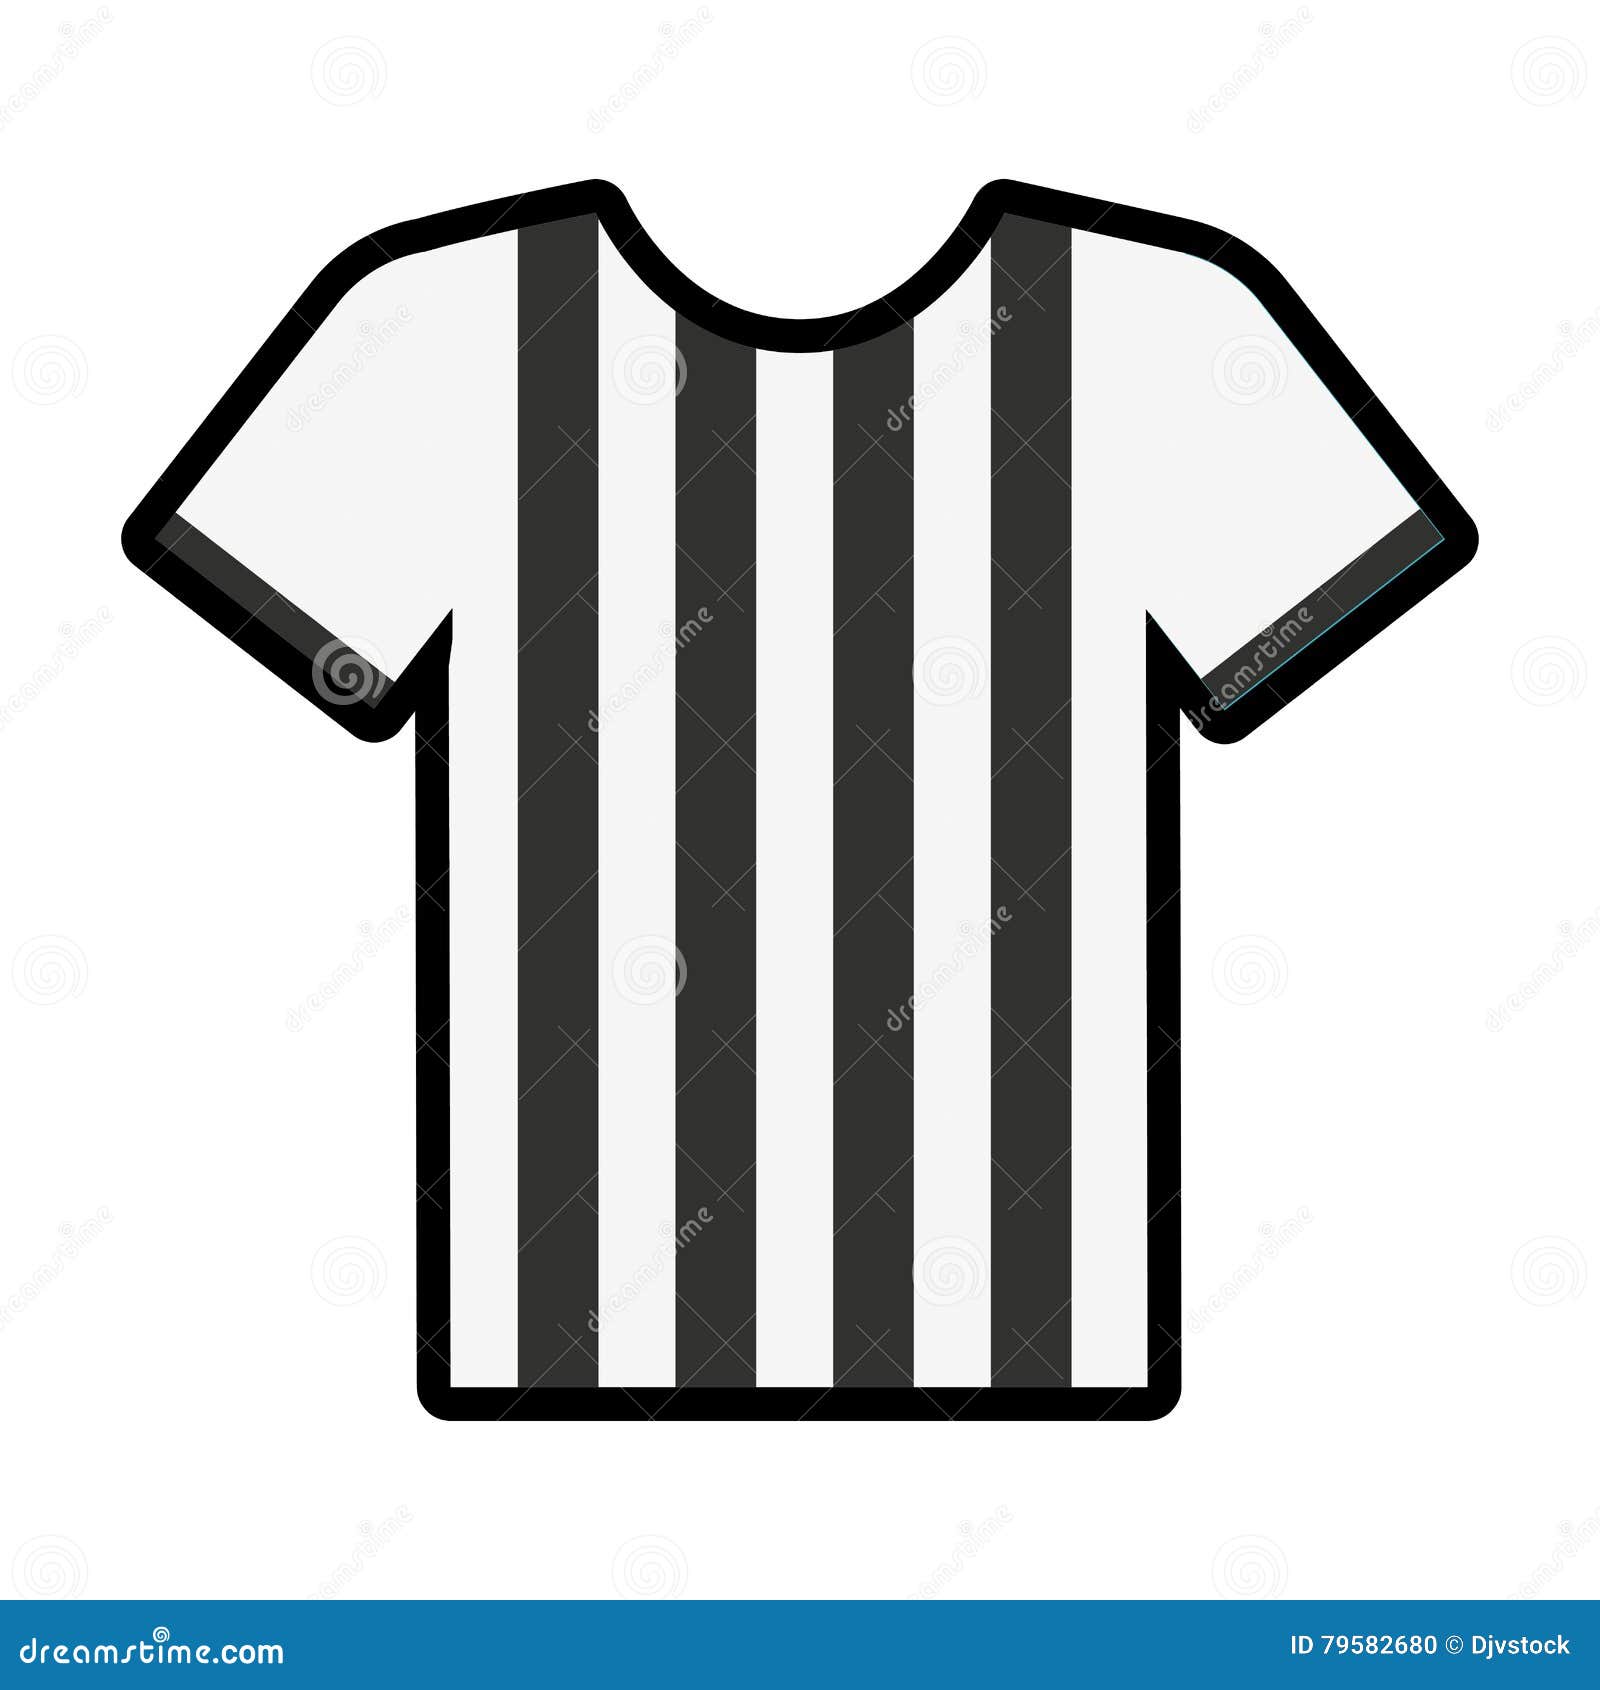 Referee shirt uniform icon stock vector. Illustration of isolated ...